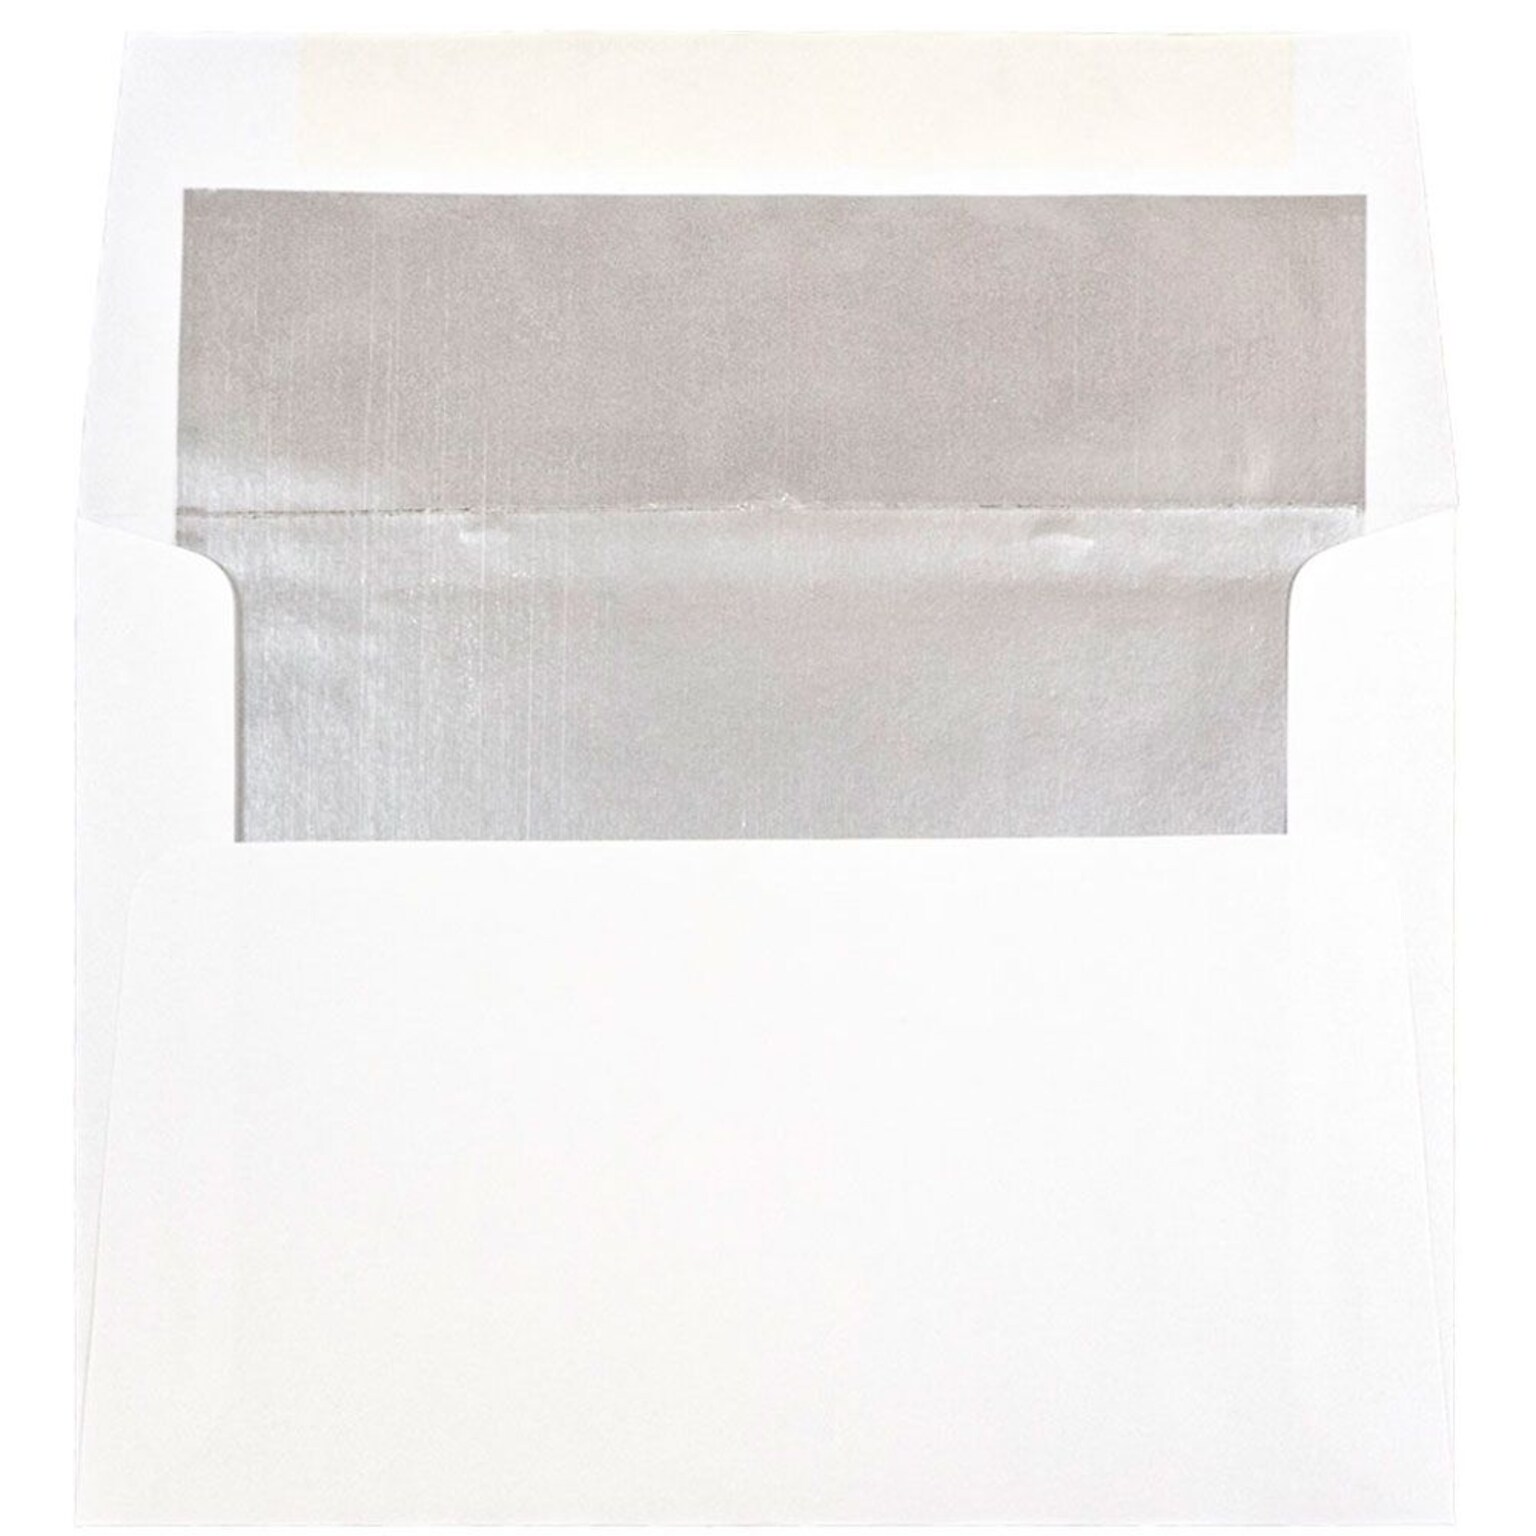 JAM Paper A6 Foil Lined Invitation Envelopes, 4.75 x 6.5, White with Silver Foil, Bulk 250/Box (82927H)